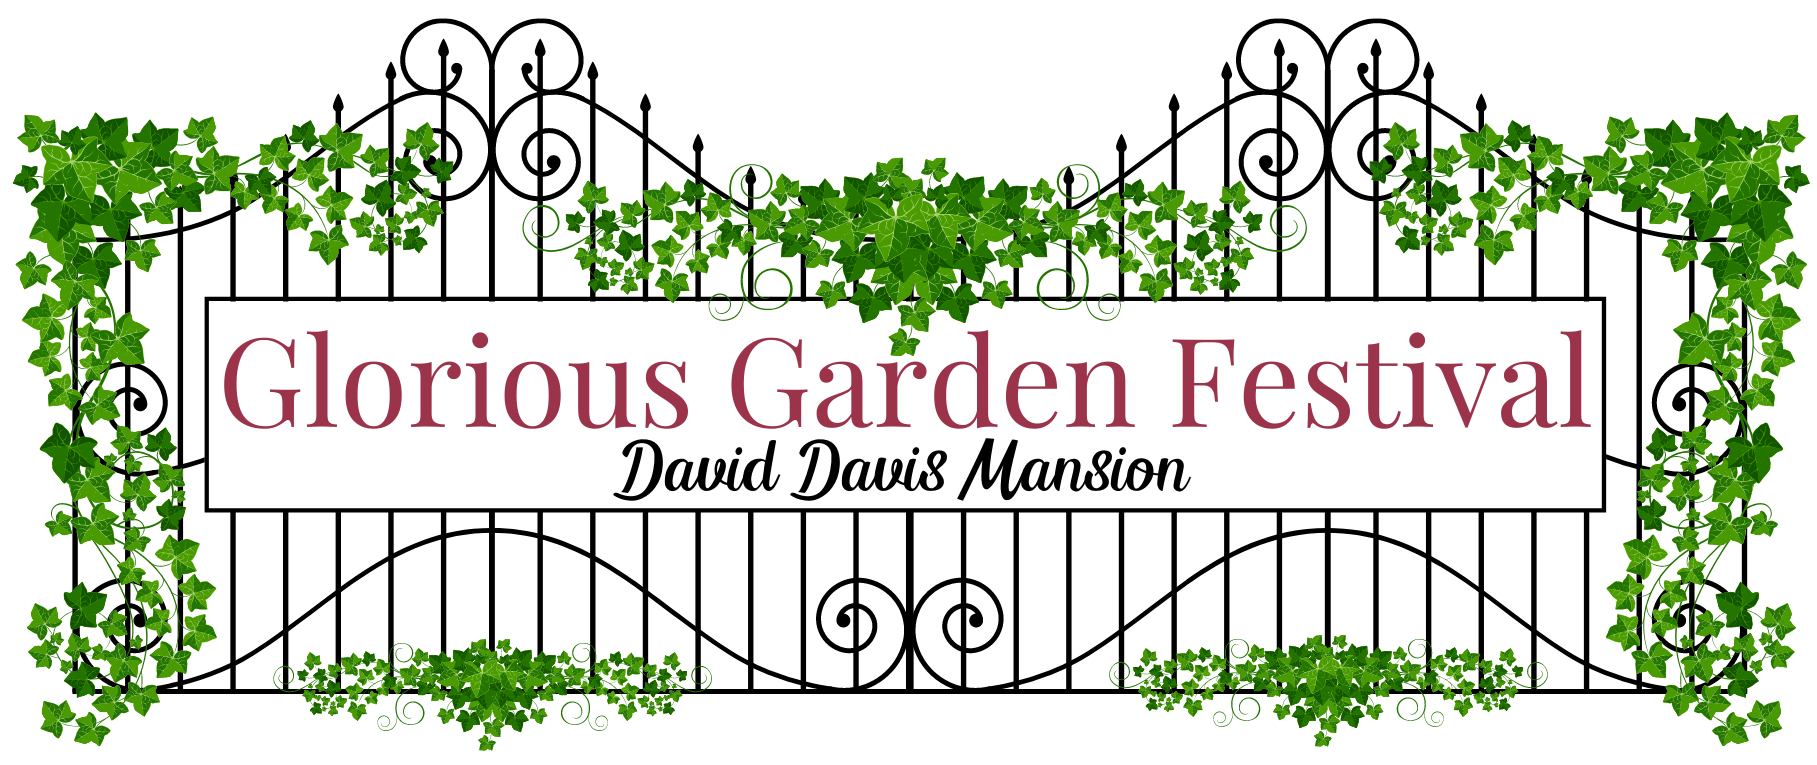 27th Annual Glorious Garden Festival